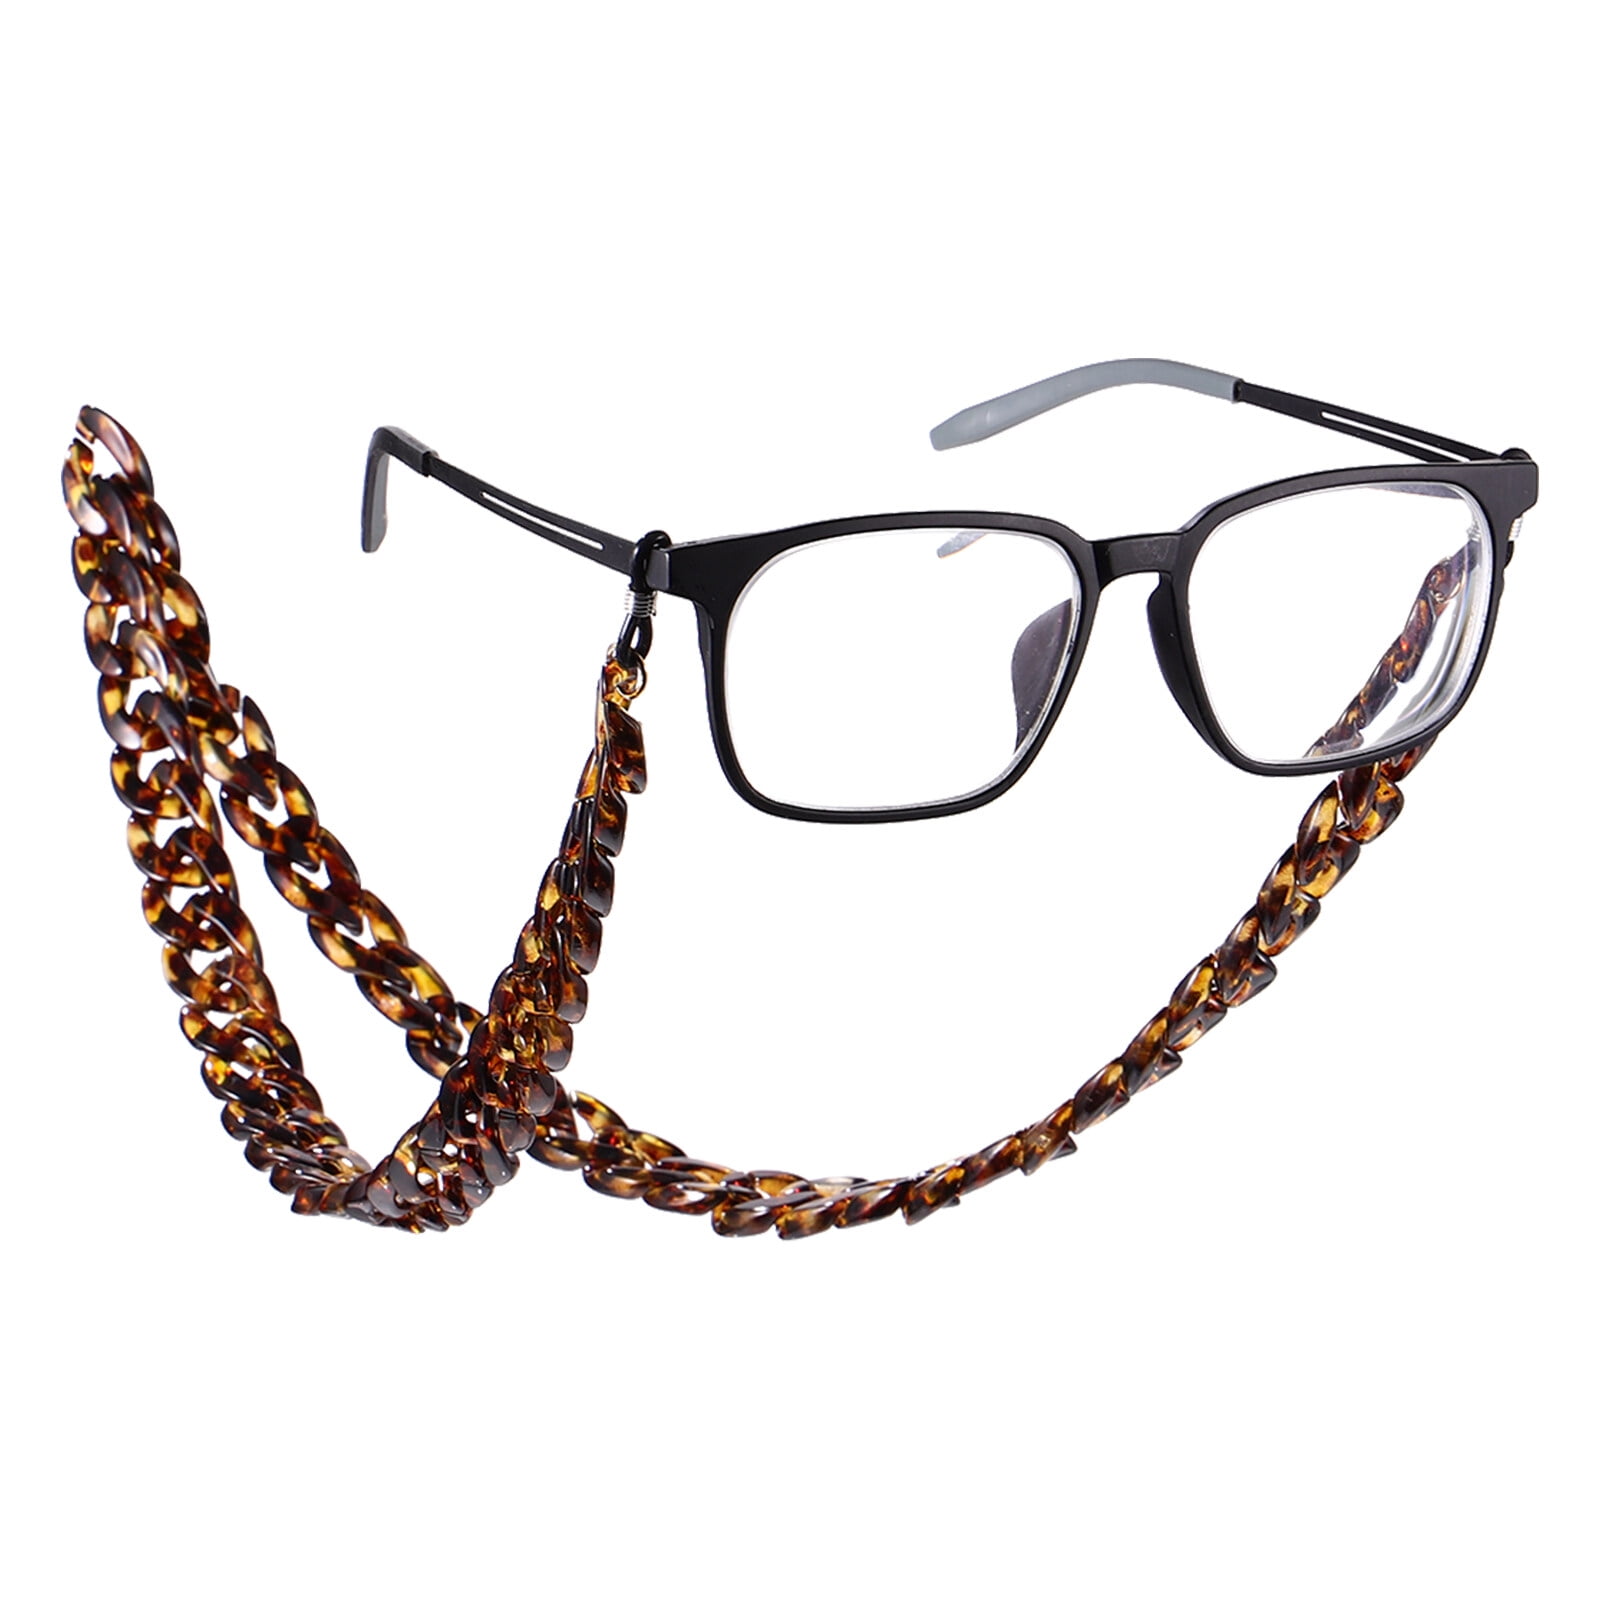 Chunky Glasses Chain Sunglass Strap in Black Tortoiseshell 